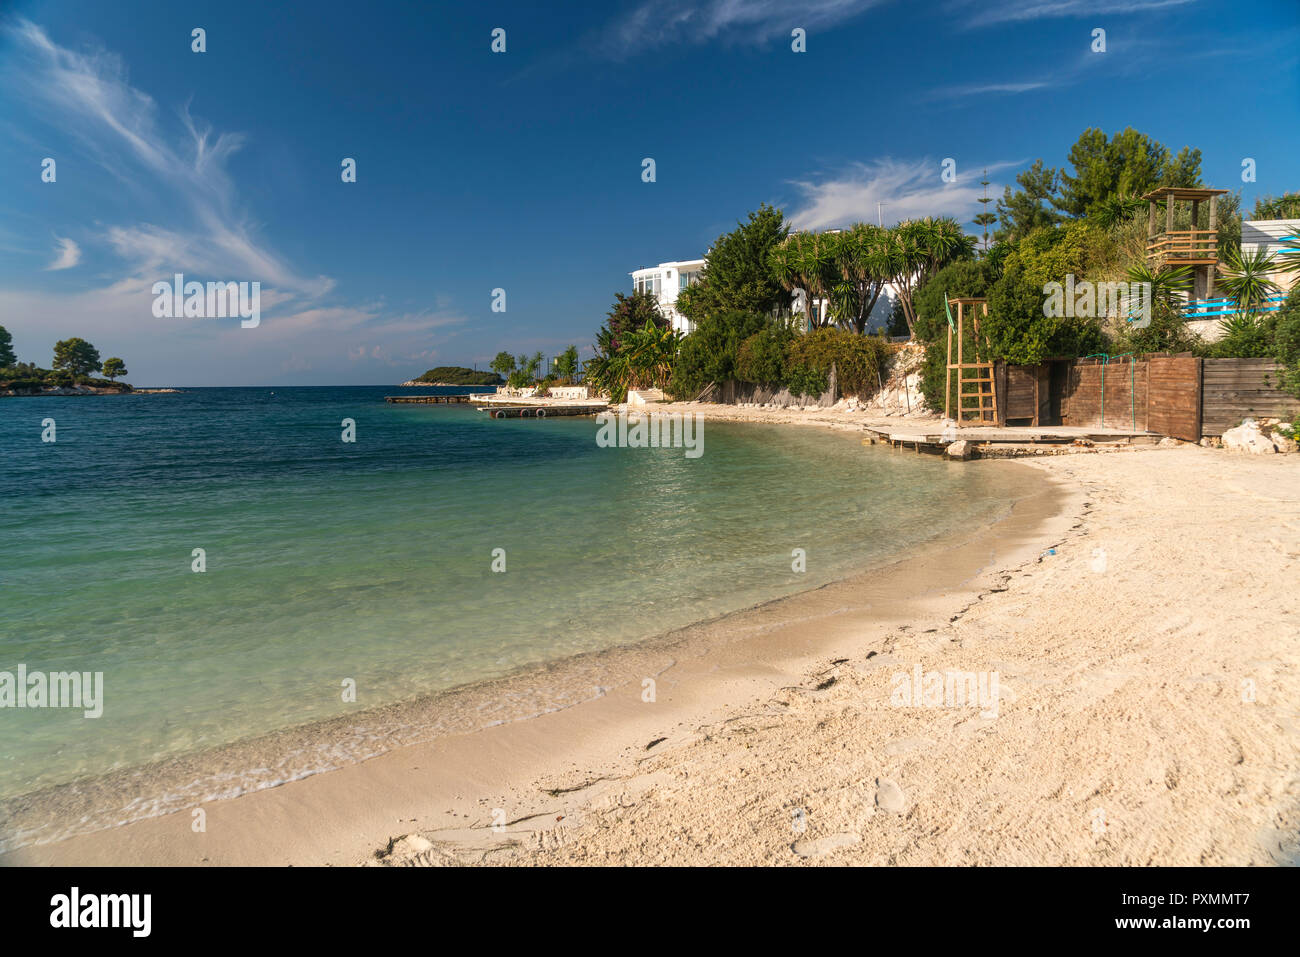 Strand im Badeort Ksamil, Albanien, Europa |  bay and beach in Ksamil, Albania, Europe Stock Photo